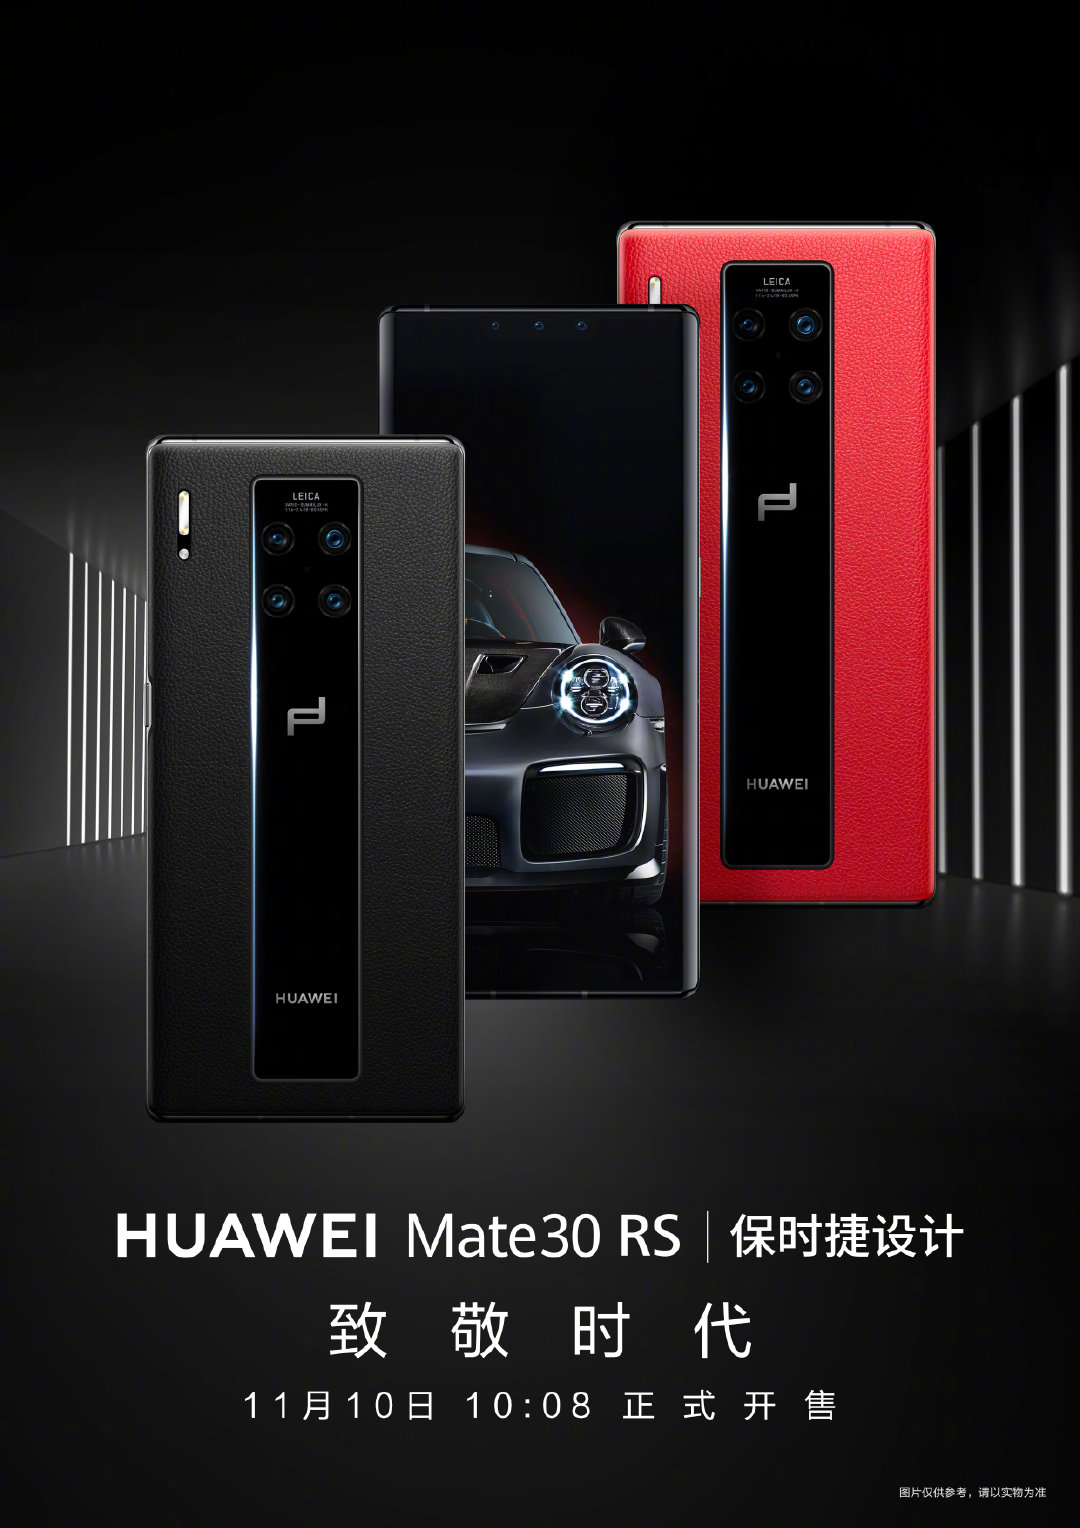 Tientallen levend smaak First sale of Huawei Mate 30 RS Porsche Design will start on November 10 -  Huawei Central